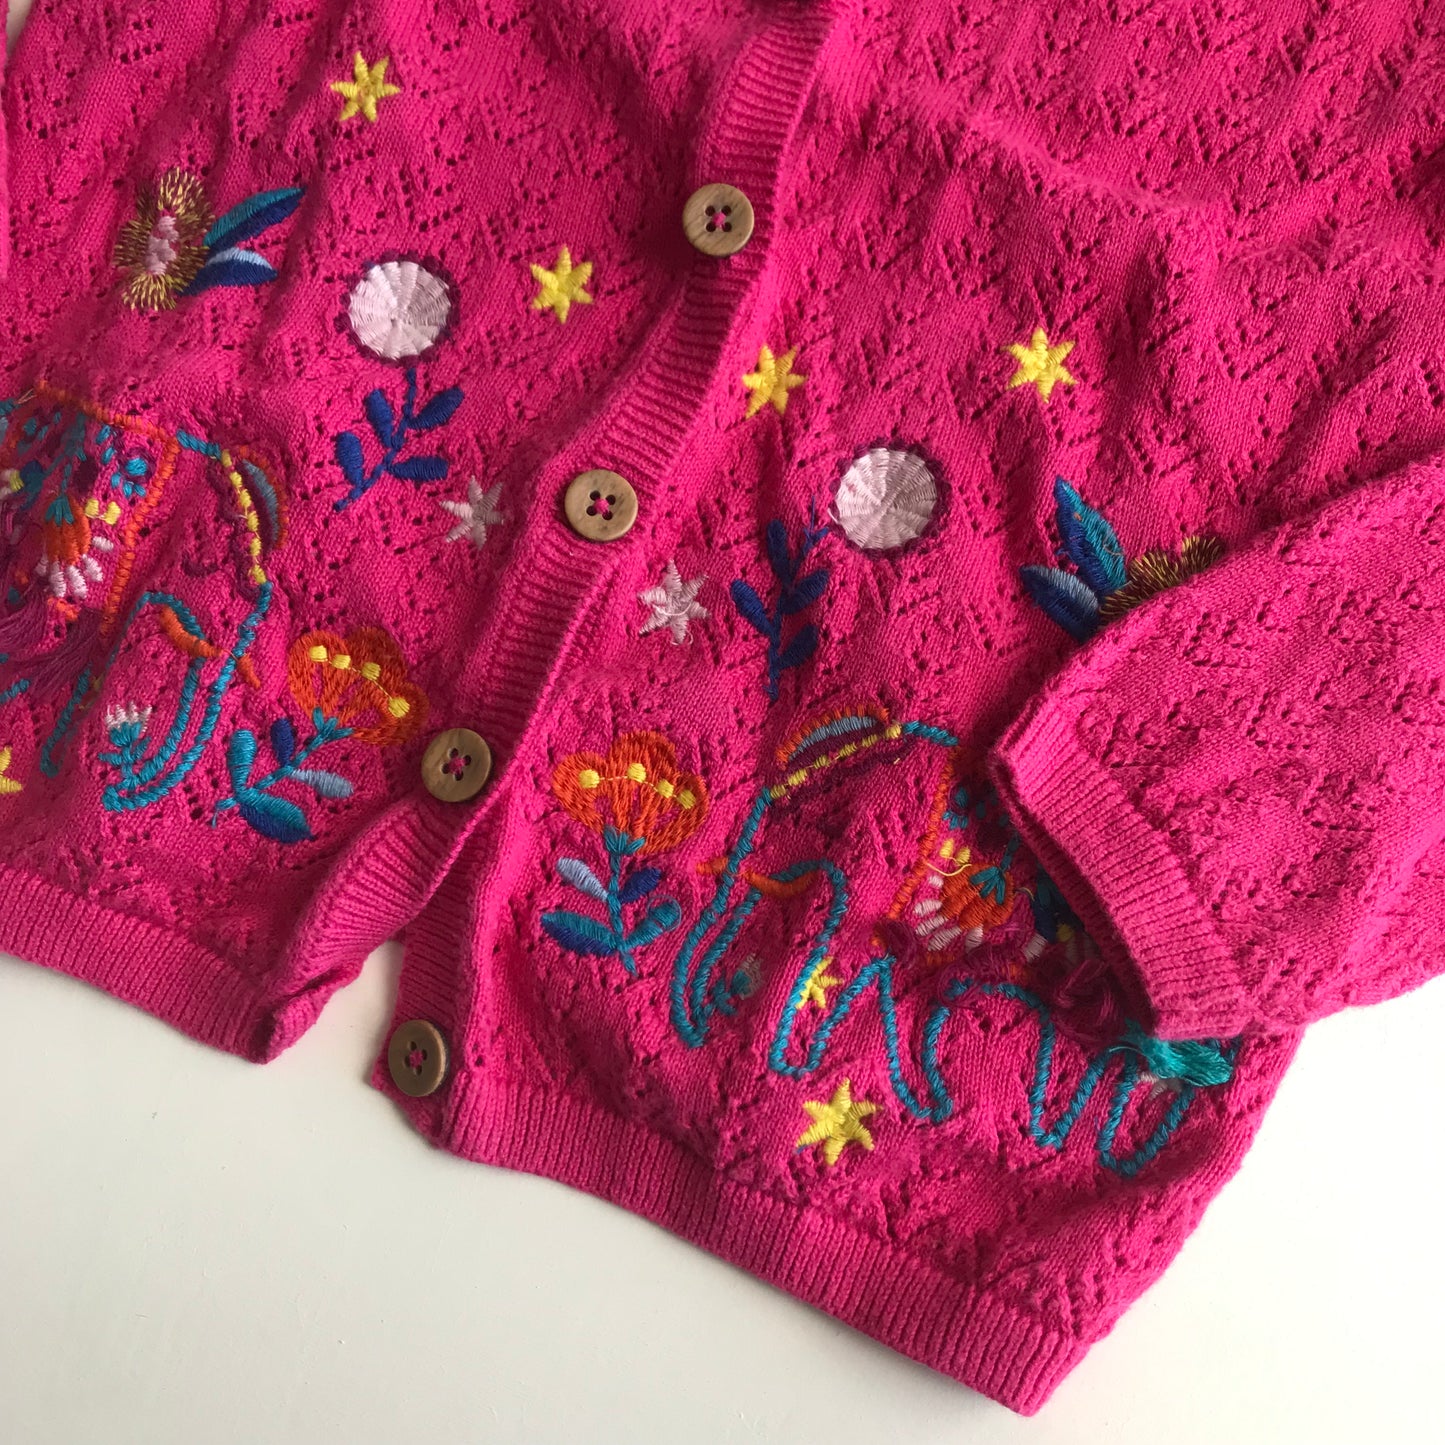 Tu Pink Embroidery Cardigan Age 5